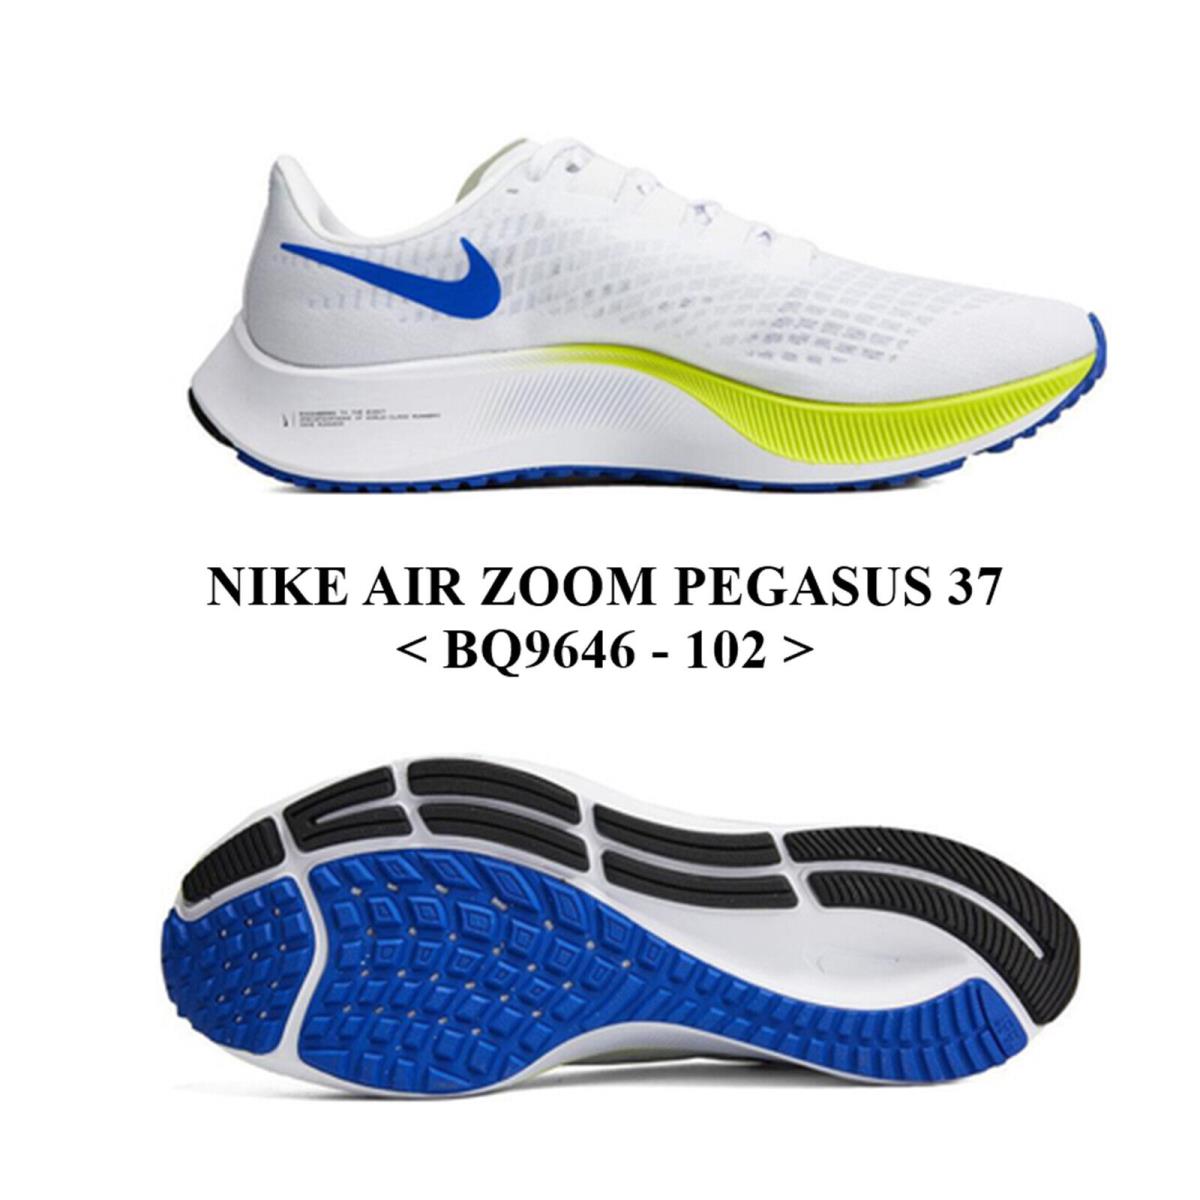 Nike Air Zoom Pegasus 37 BQ9646-102 Men`s Running Shoes. NO Lid - White/Blue/Green